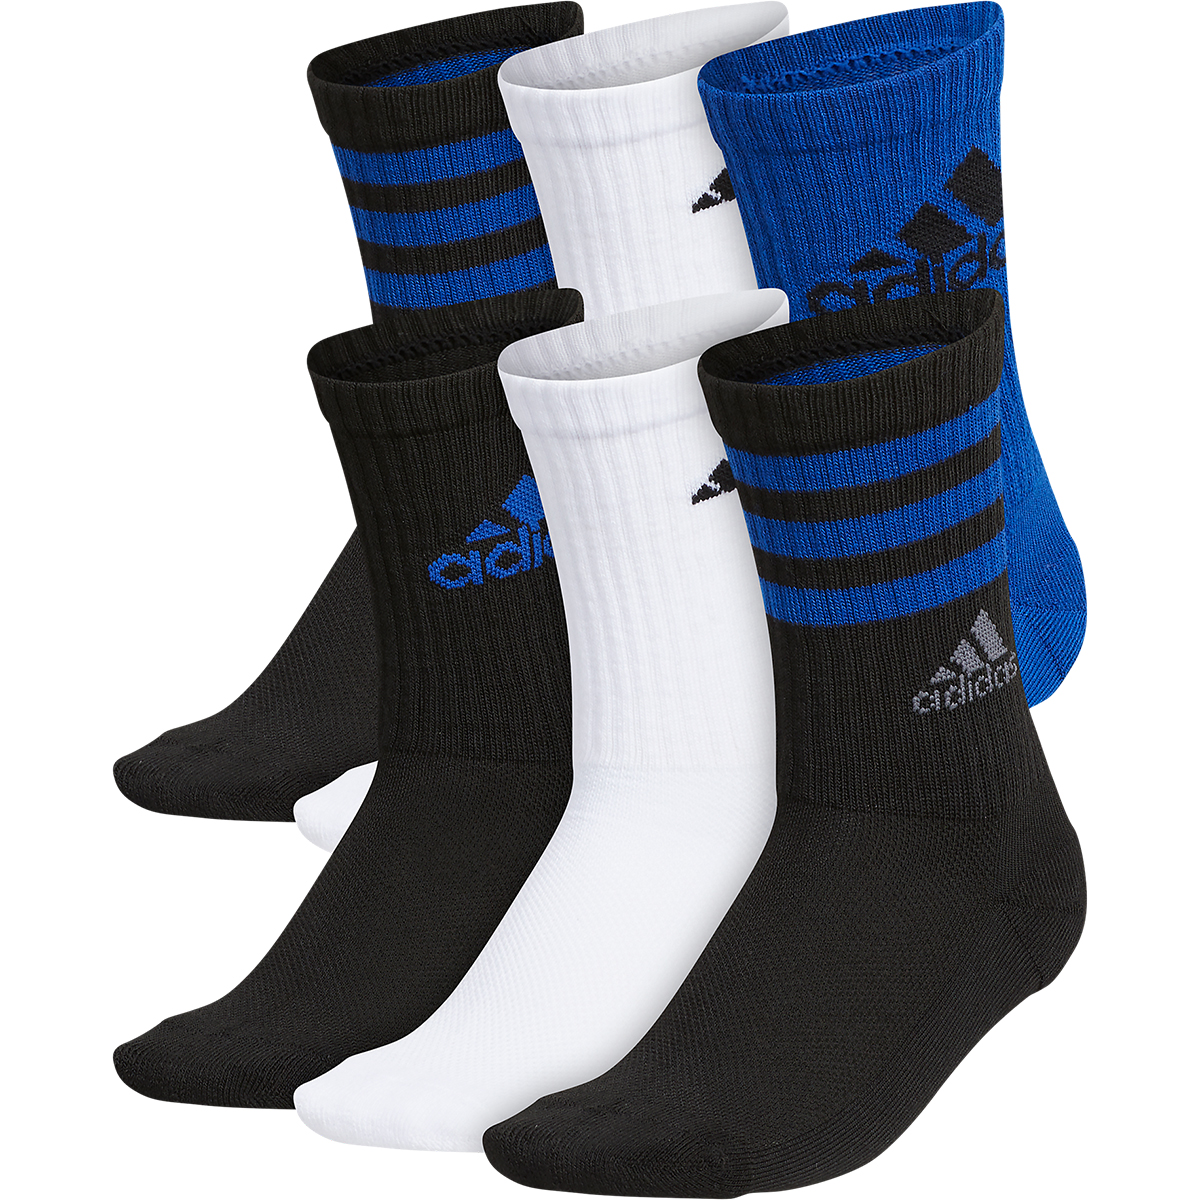 Adidas Boys' Cushioned Crew Socks, Assorted 6-Pack